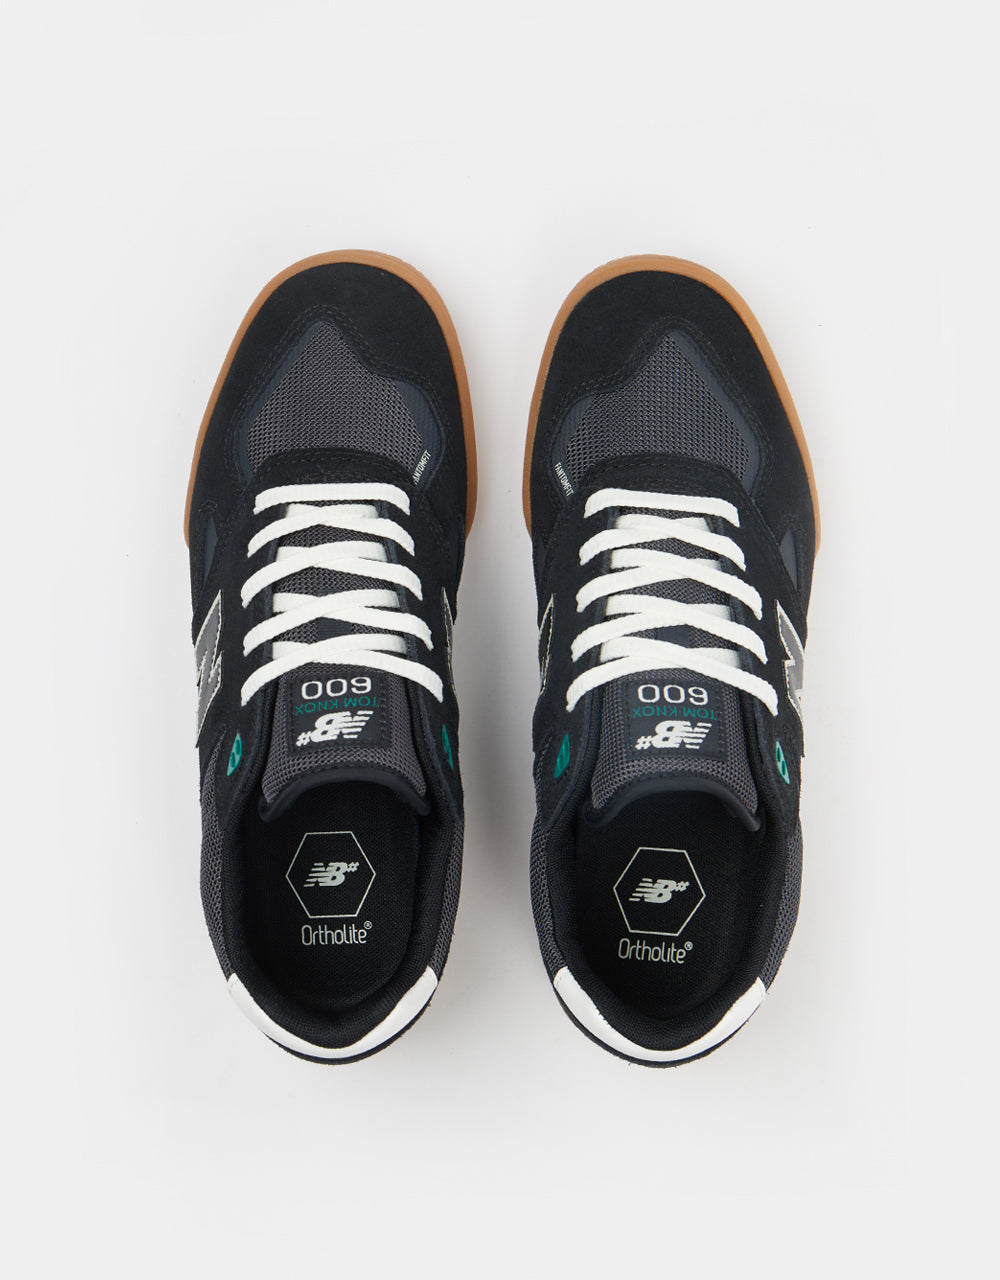 New Balance Numeric 600 Skate Shoes - Black/Gum